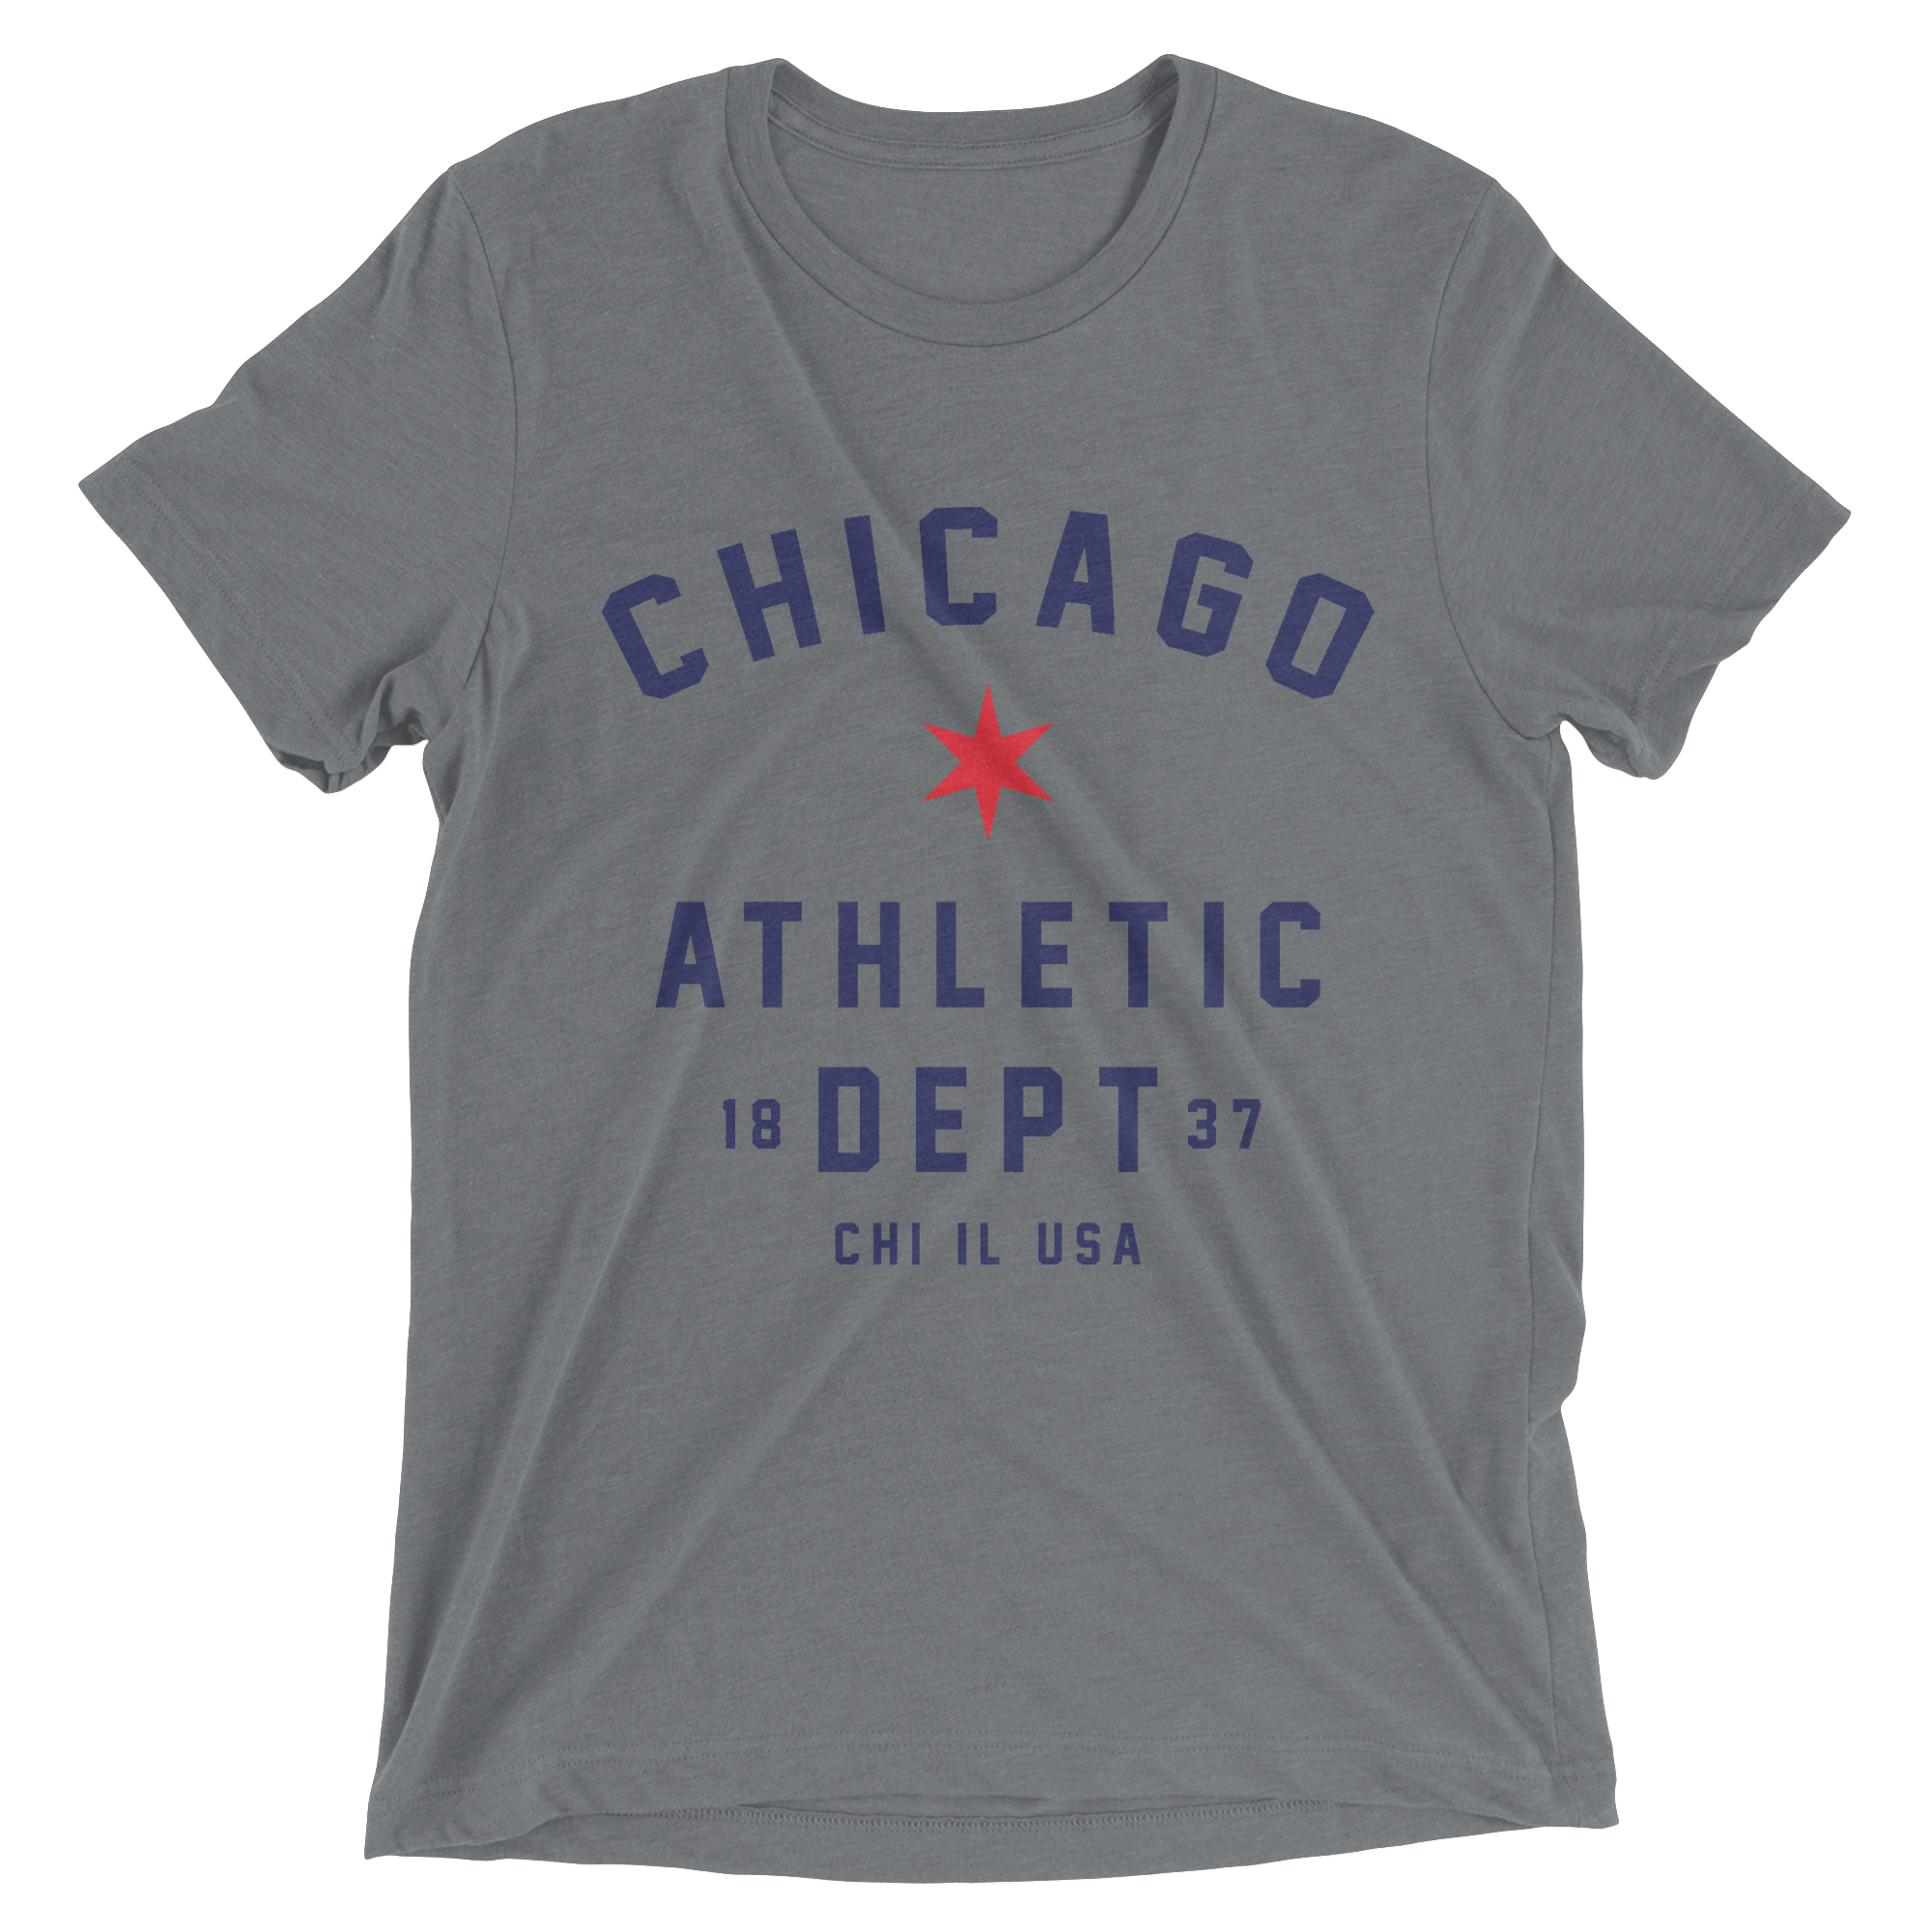 The T-Shirt Deli, Co. Chicago Athletic Dept. T